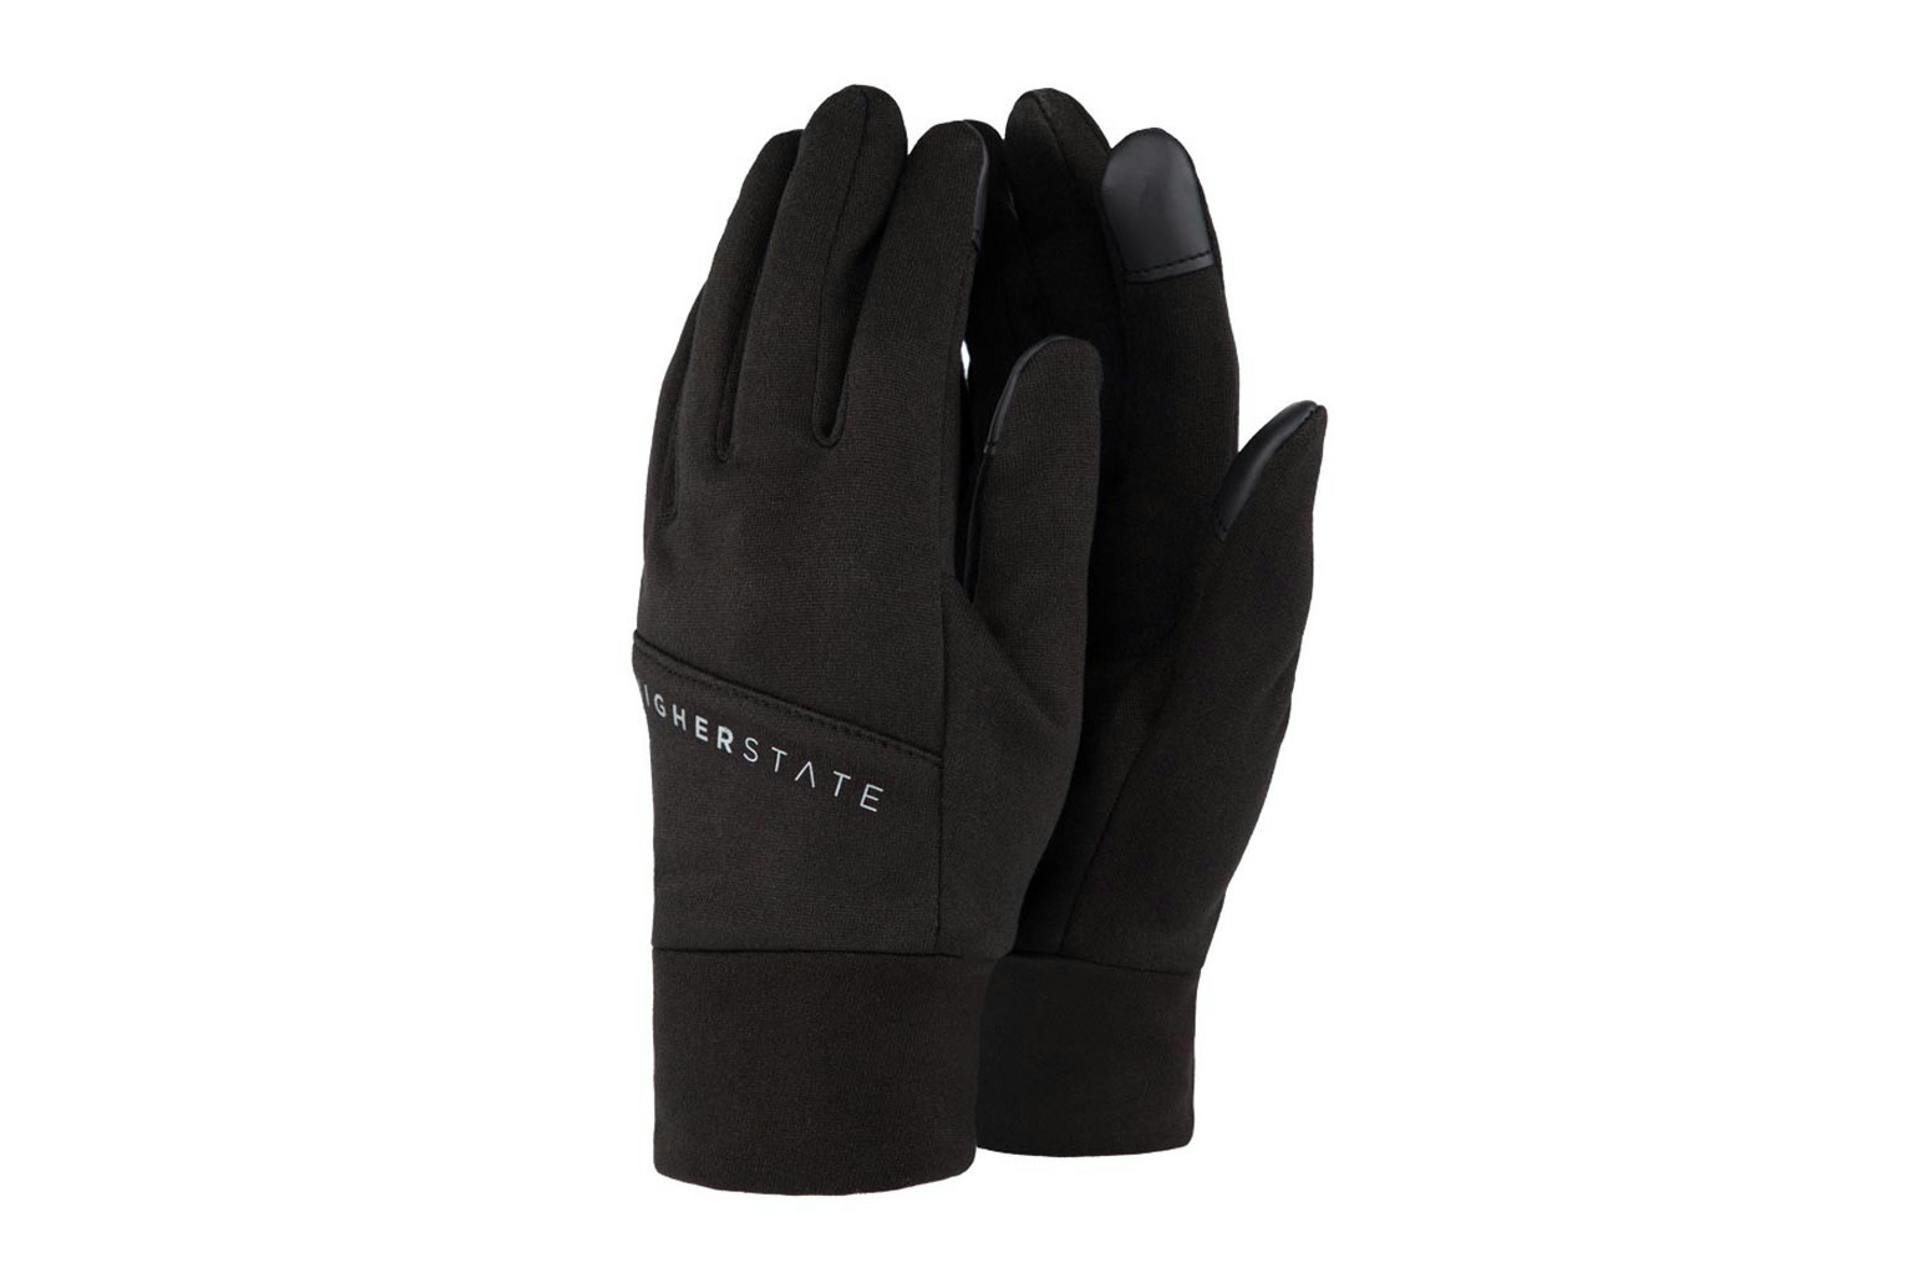 higher-state-running-gloves